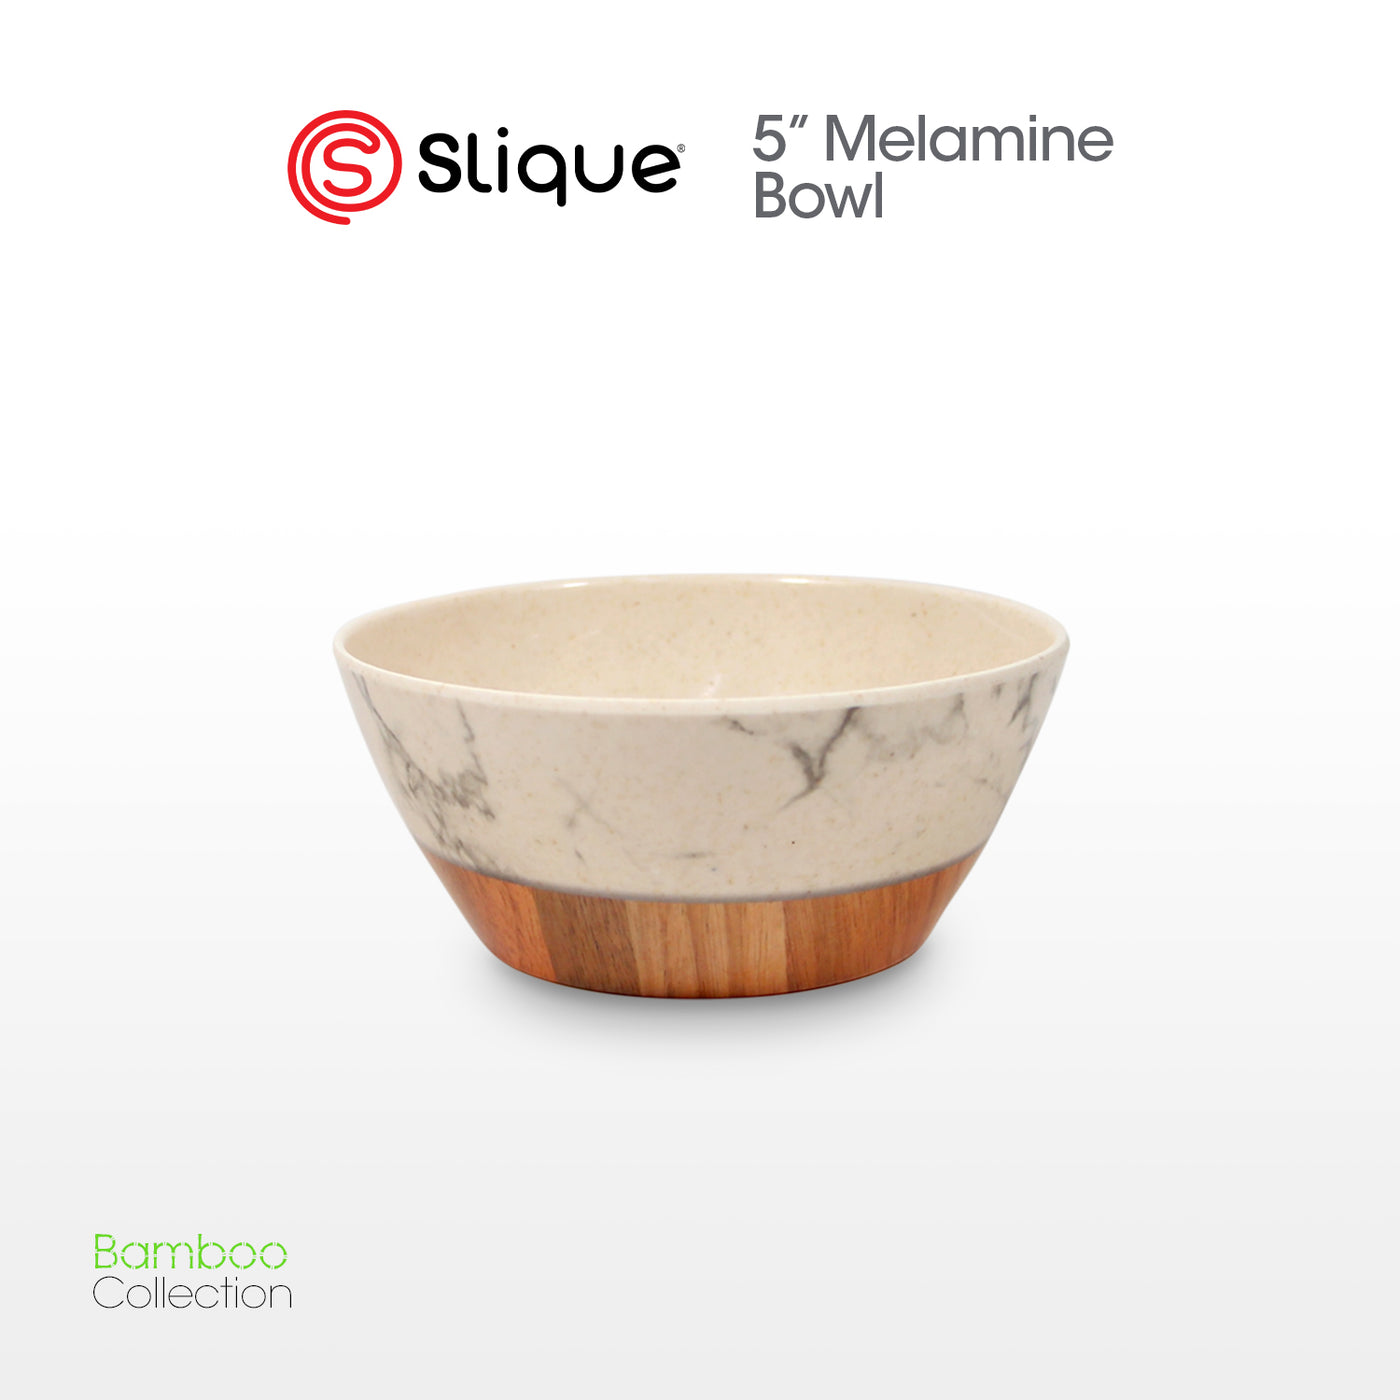 SLIQUE Premium Melamine Dinner Plate , Dessert Plate, Serving Plate, Tidbit Bowl, Sauce Dish, Pasta Bowl, Rice Spoon, Soup ladle - Bamboo Collection